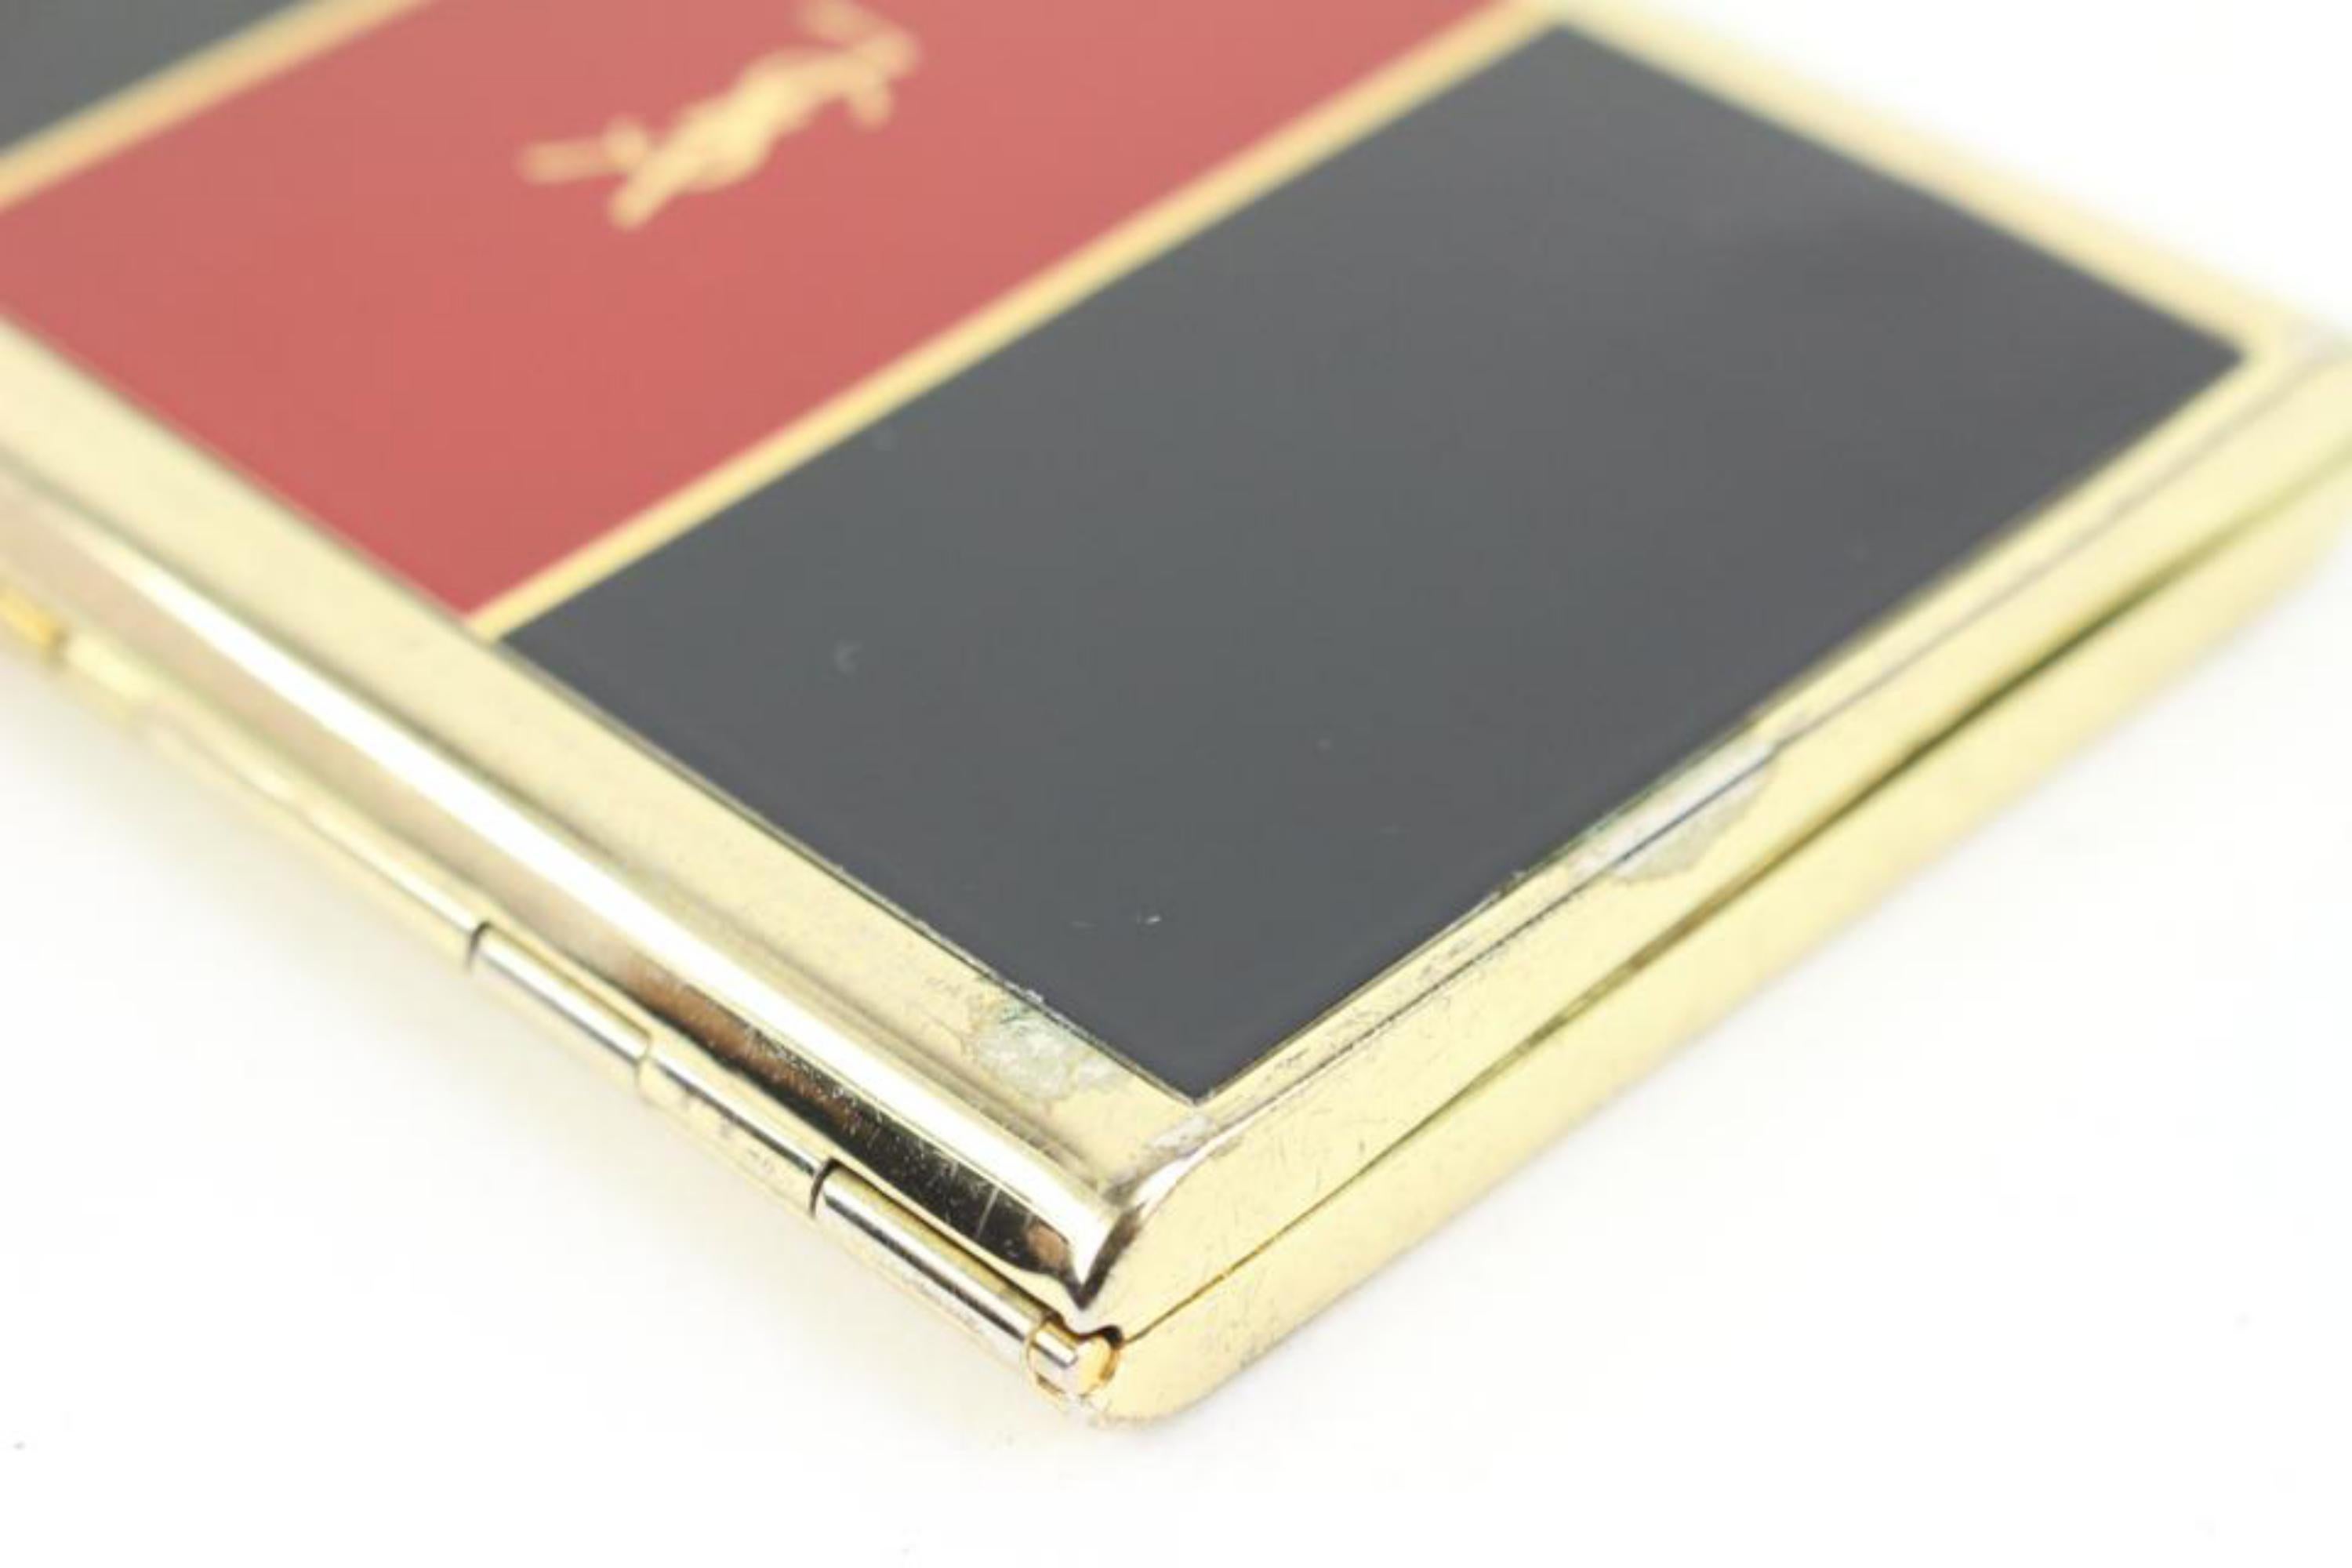 Saint Laurent Red x Black x Gold YSL Monogramme Card Case Cigarette Box  21ysl42 4